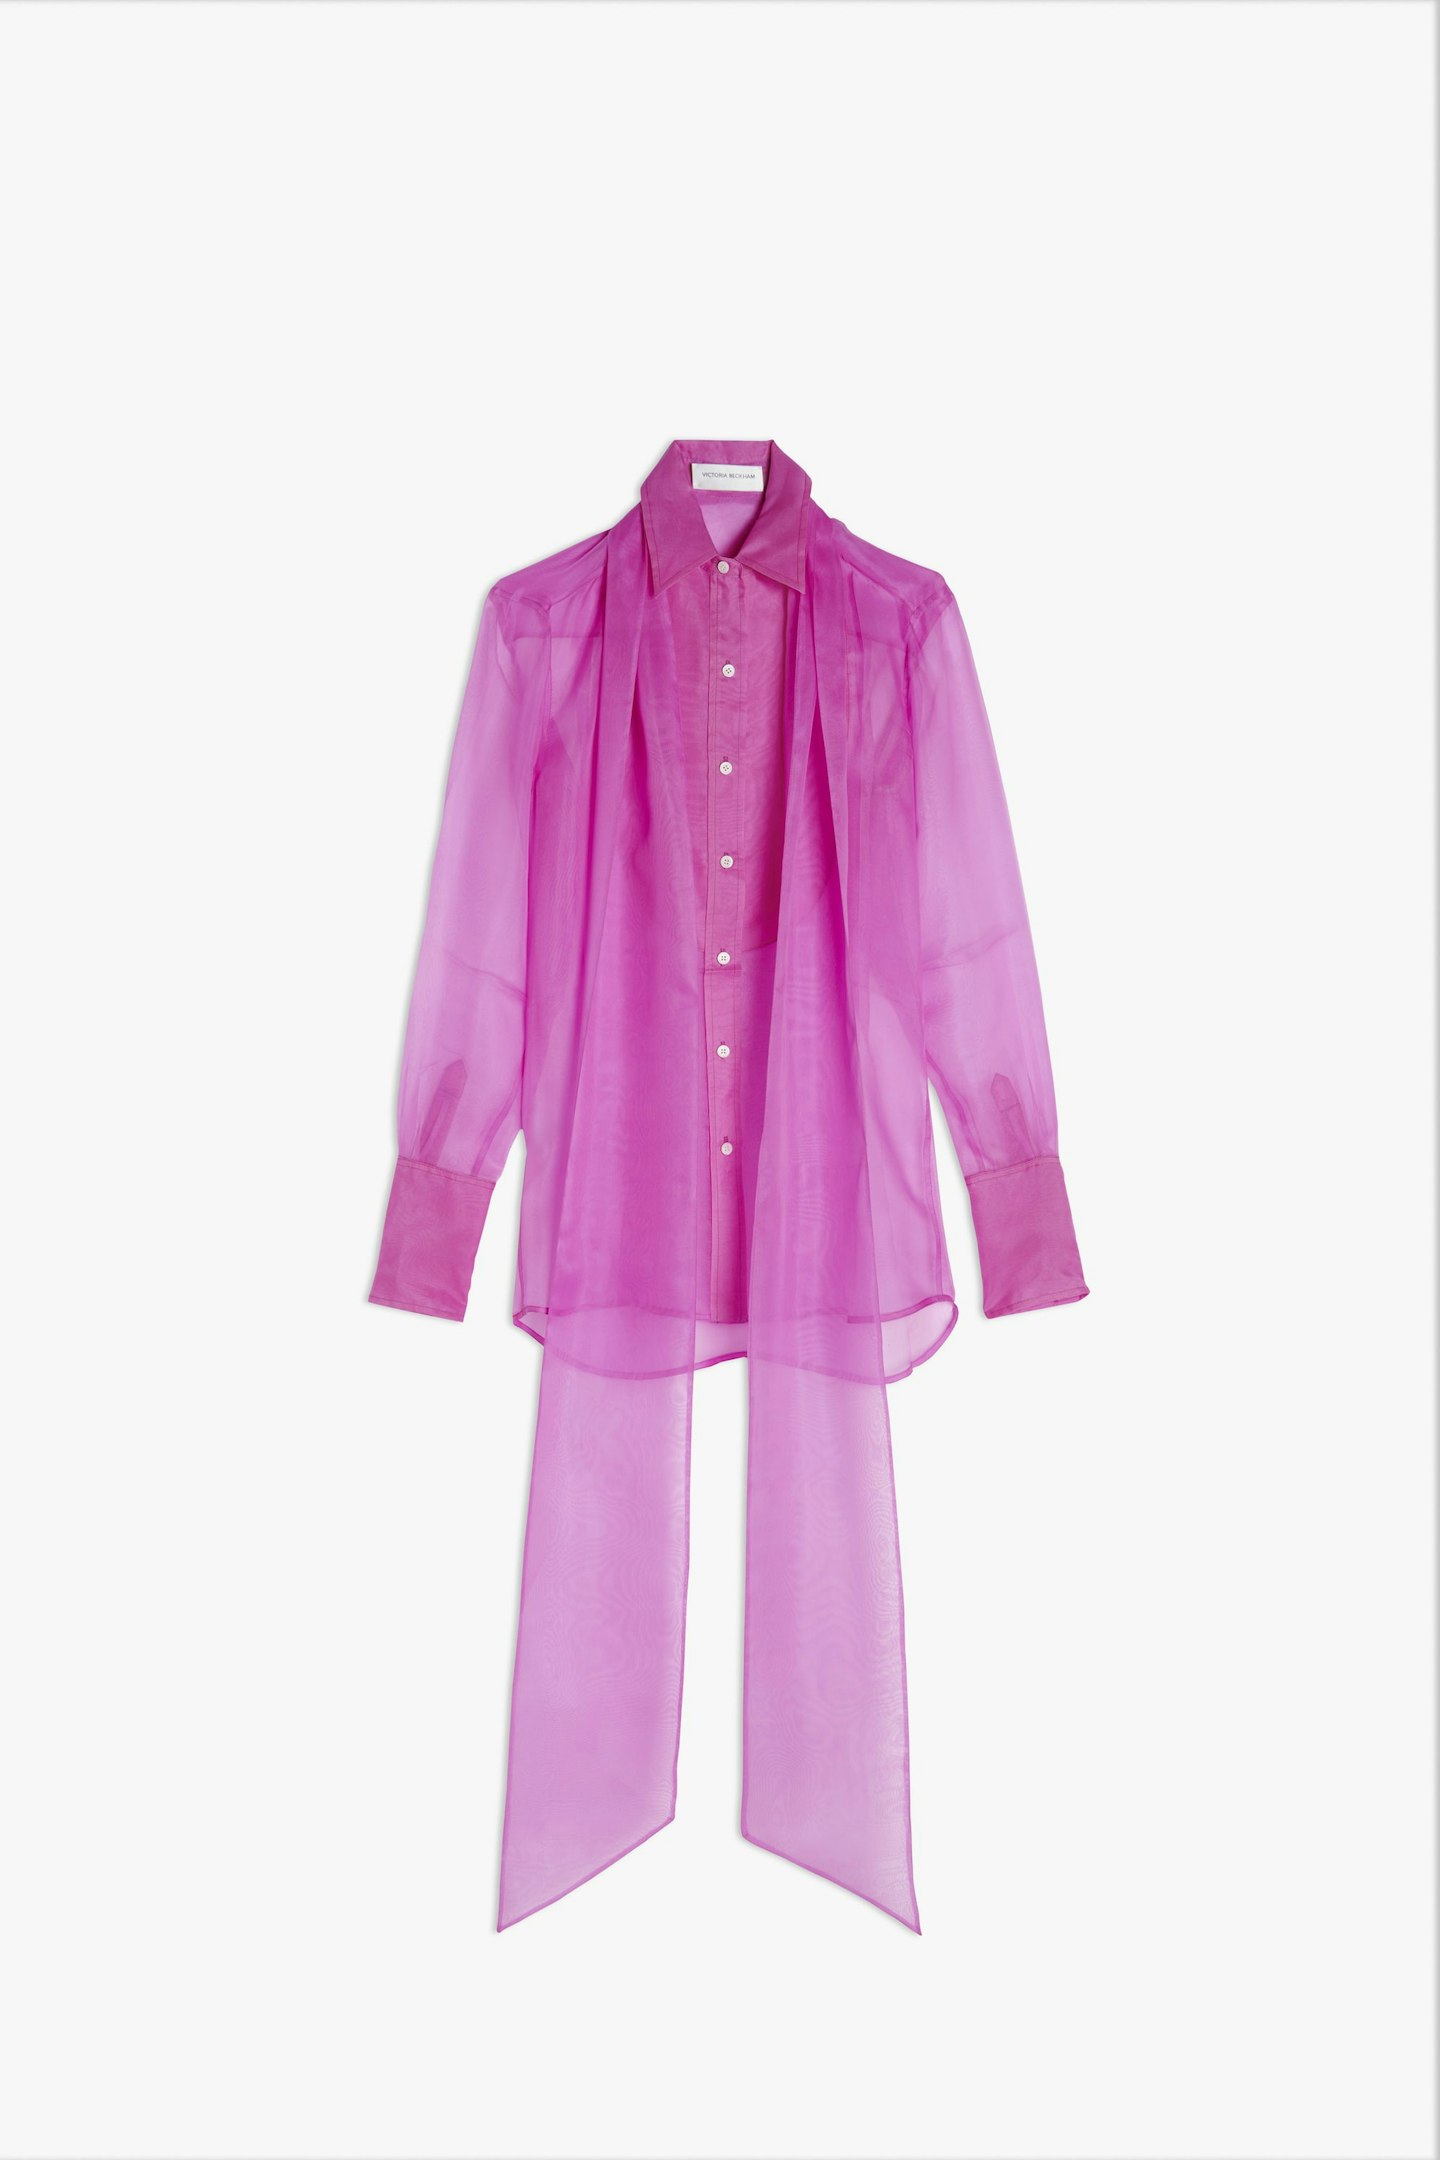 Victoria Beckham, Ruffle-Tie Blouse In Pink, £690